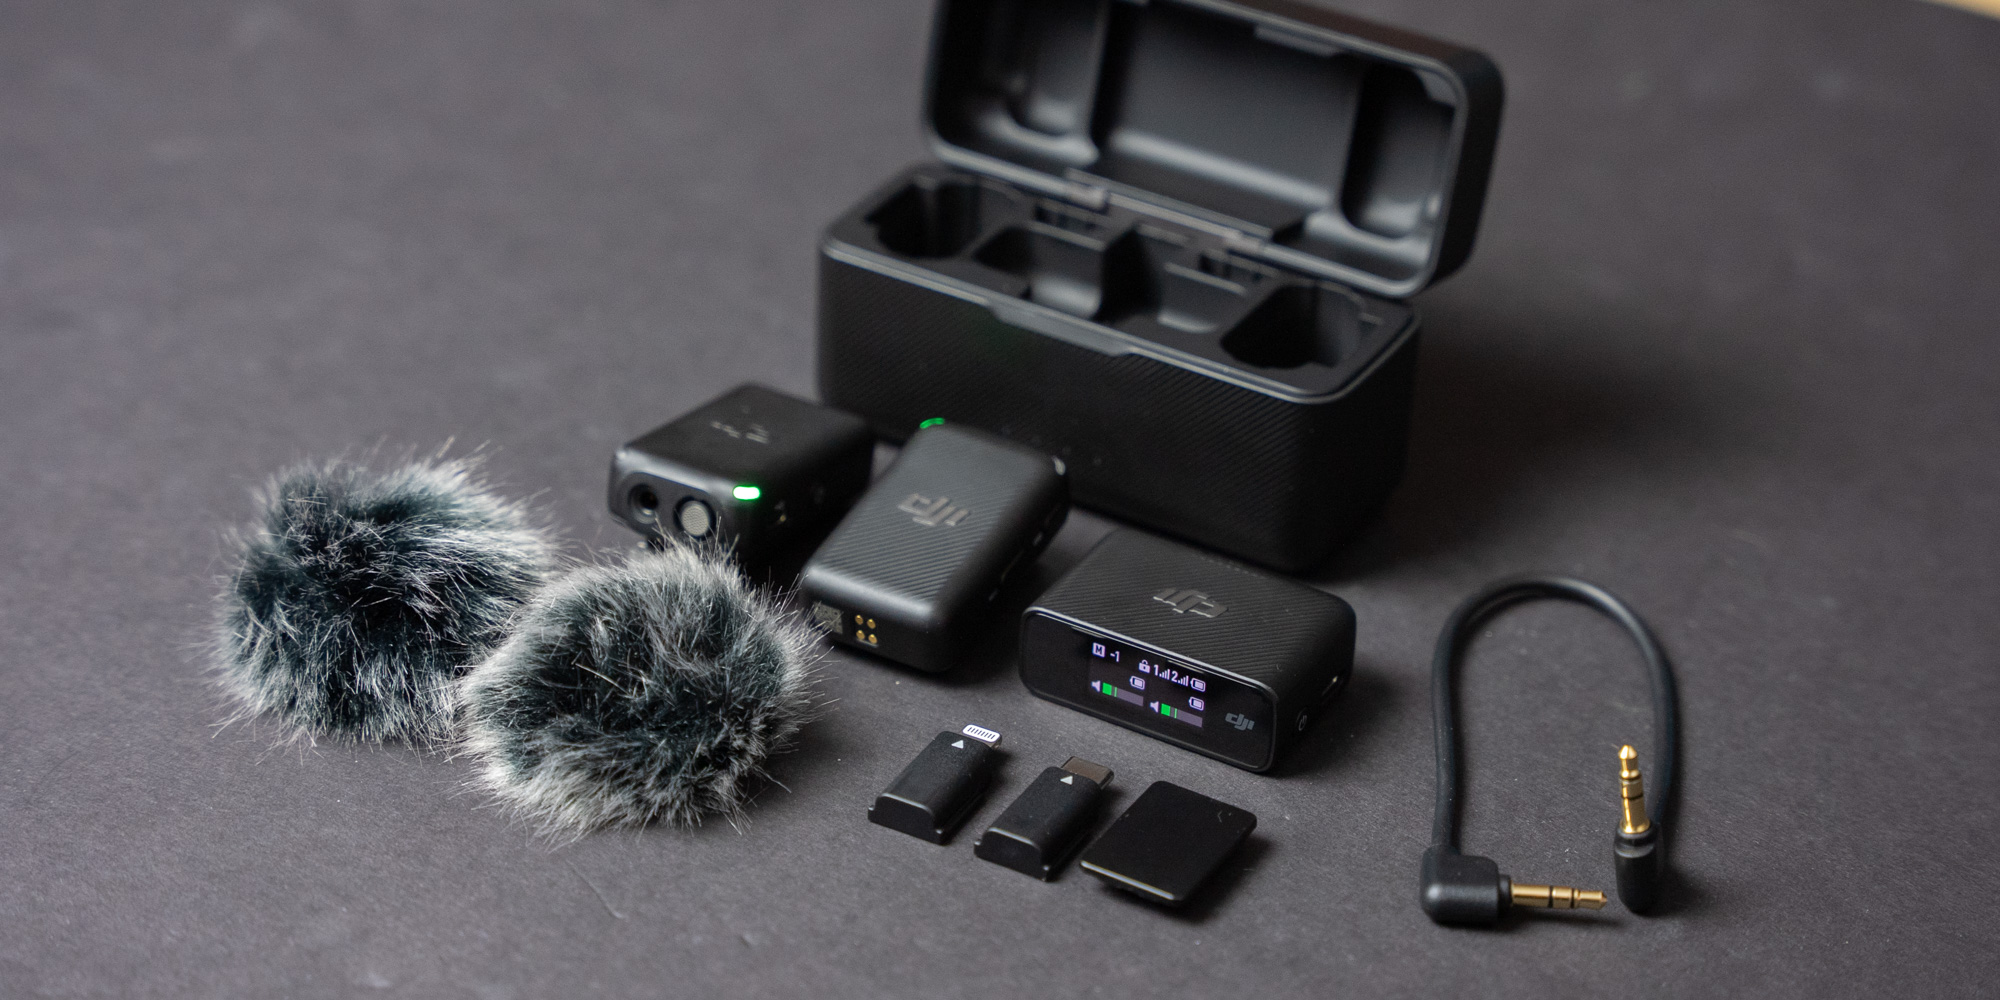 DJI Mic wireless kit review: Versatile audio in a premium package